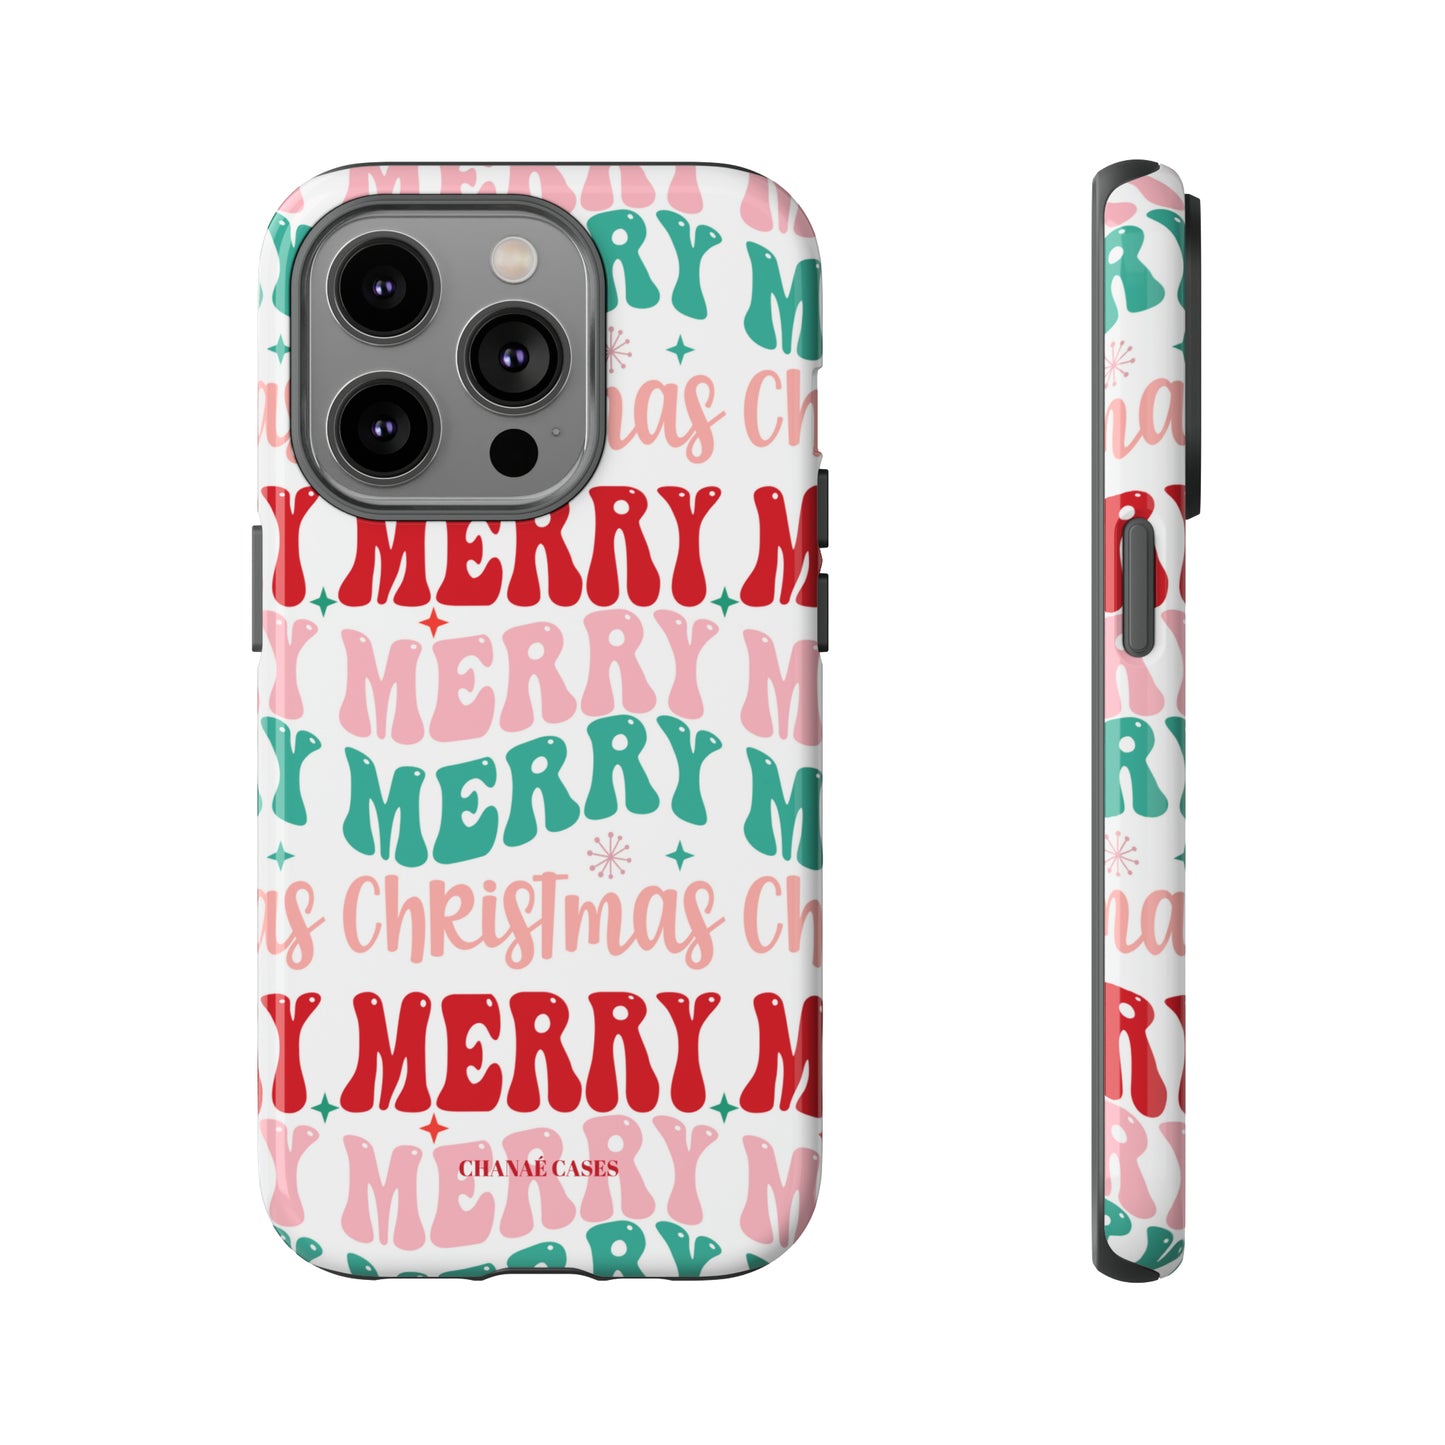 Merry Merry Christmas iPhone "Tough" Case